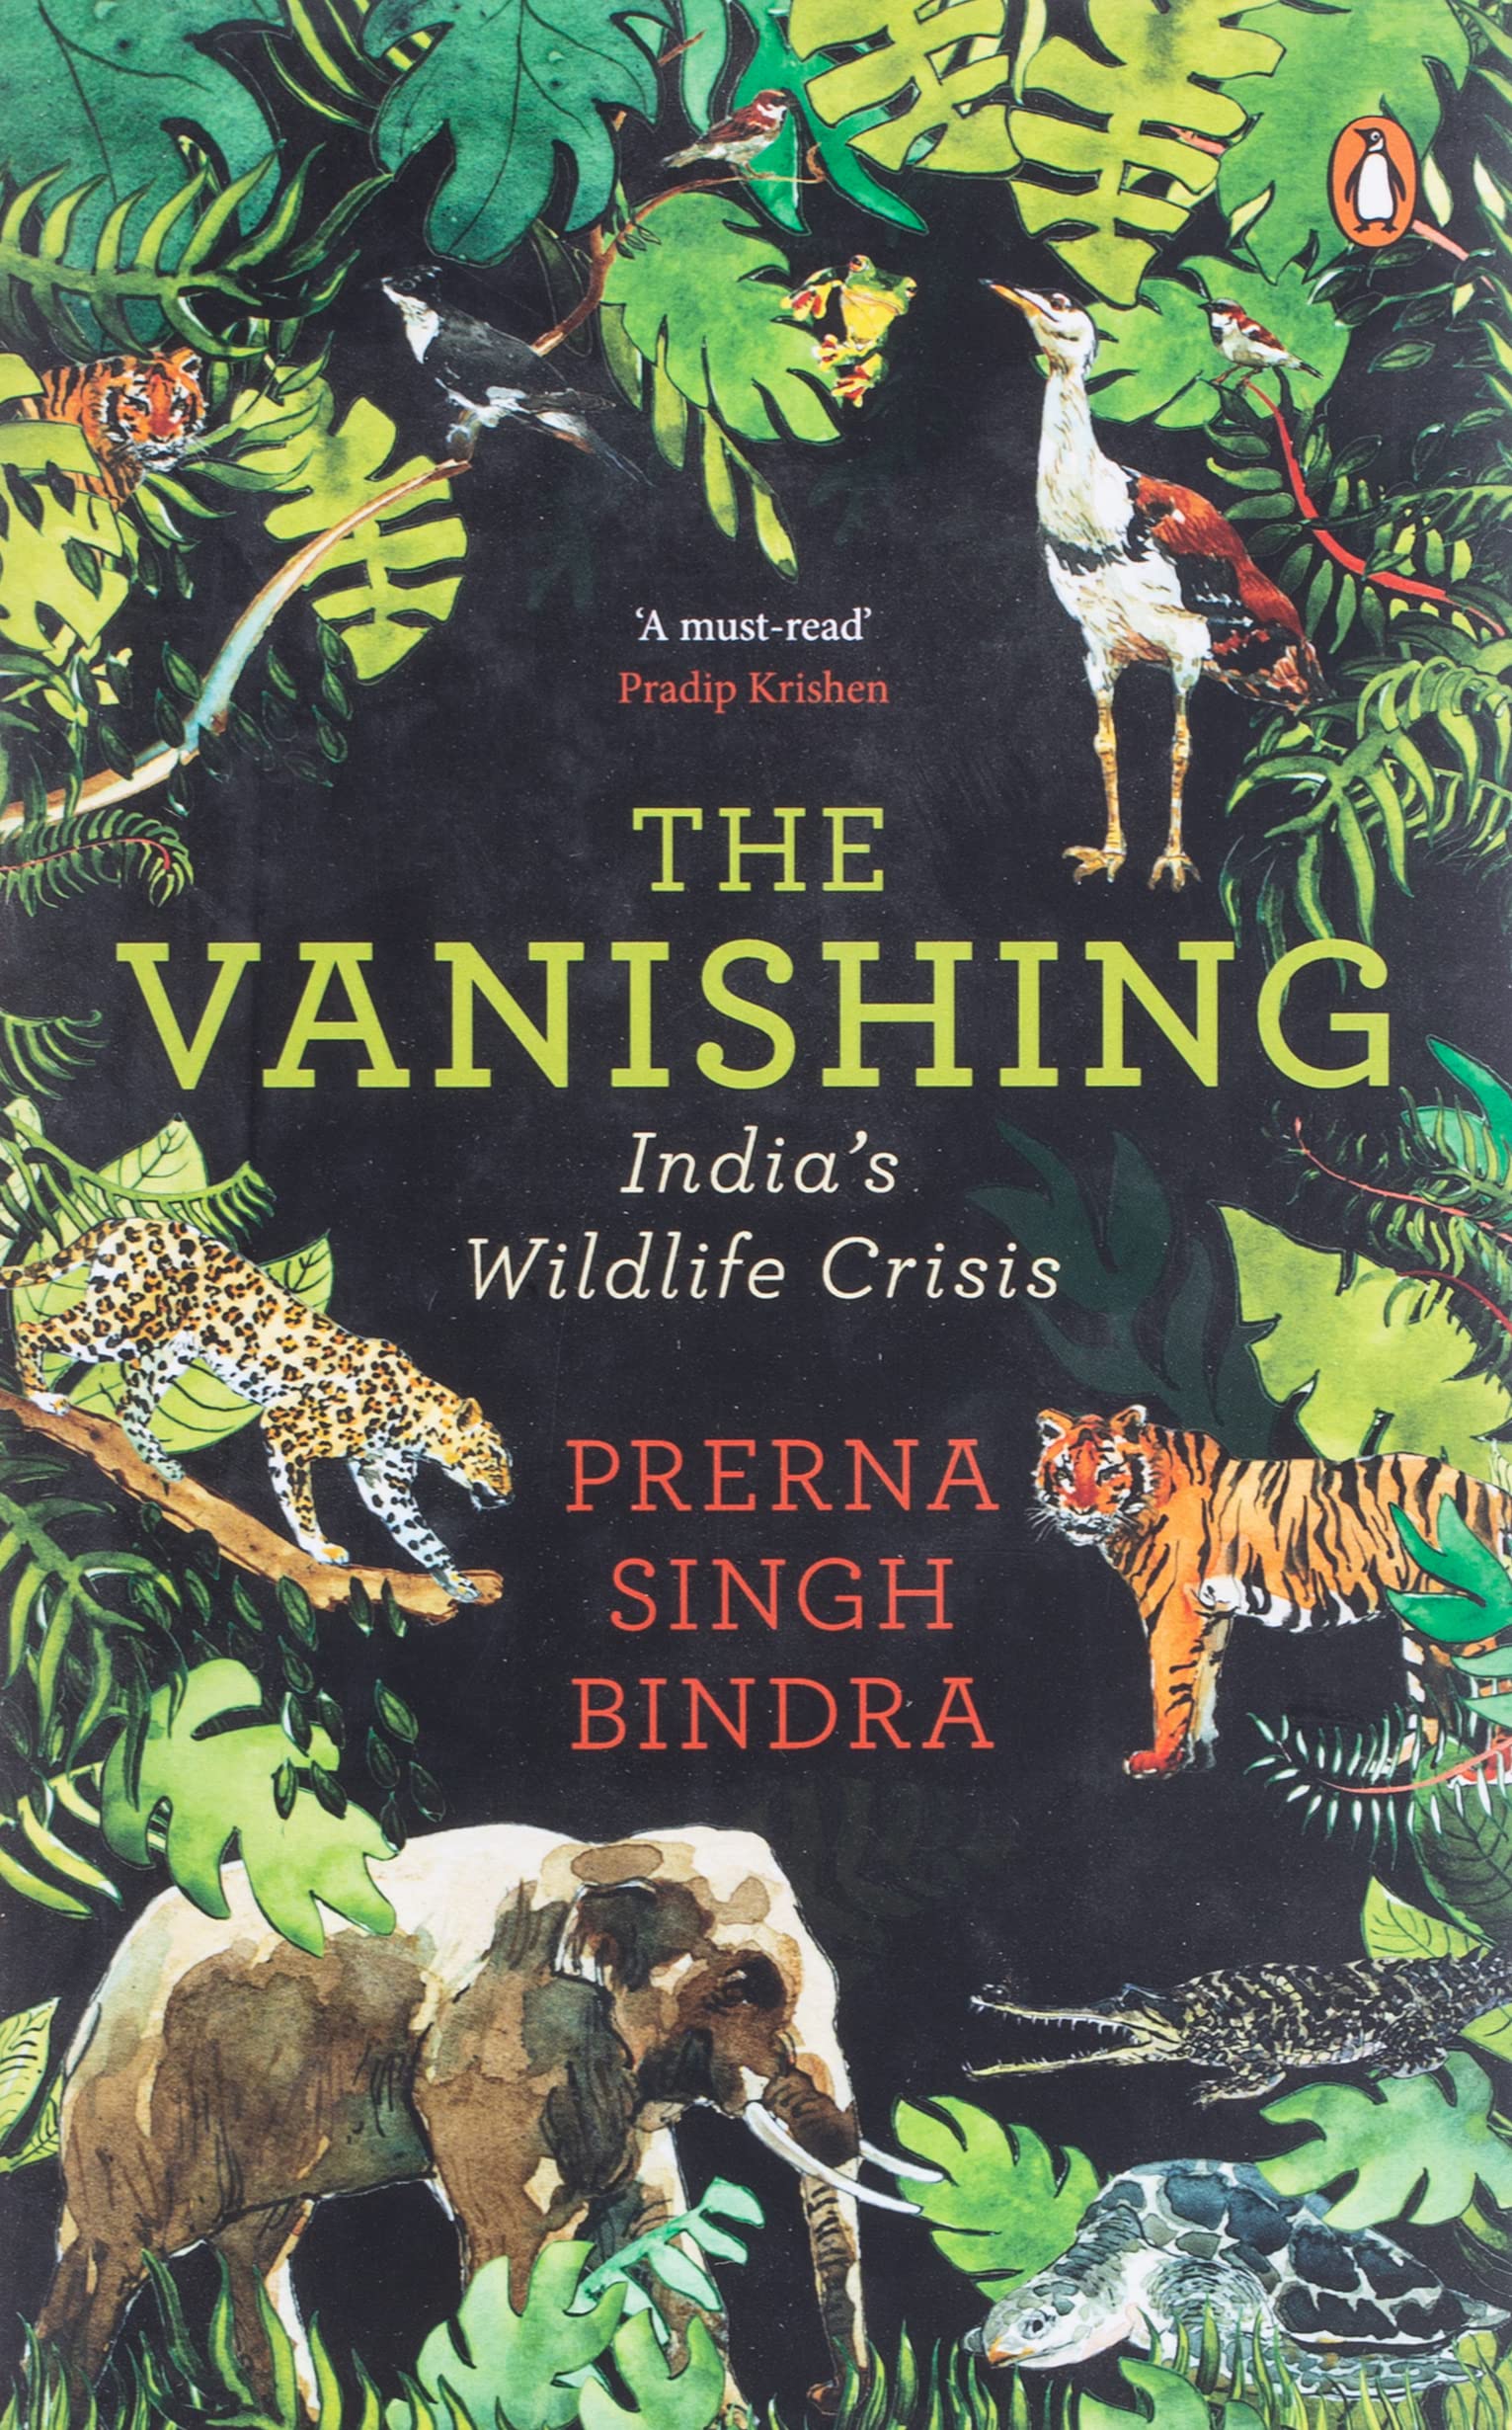 The Vanishing: India’s Wildlife Crisis